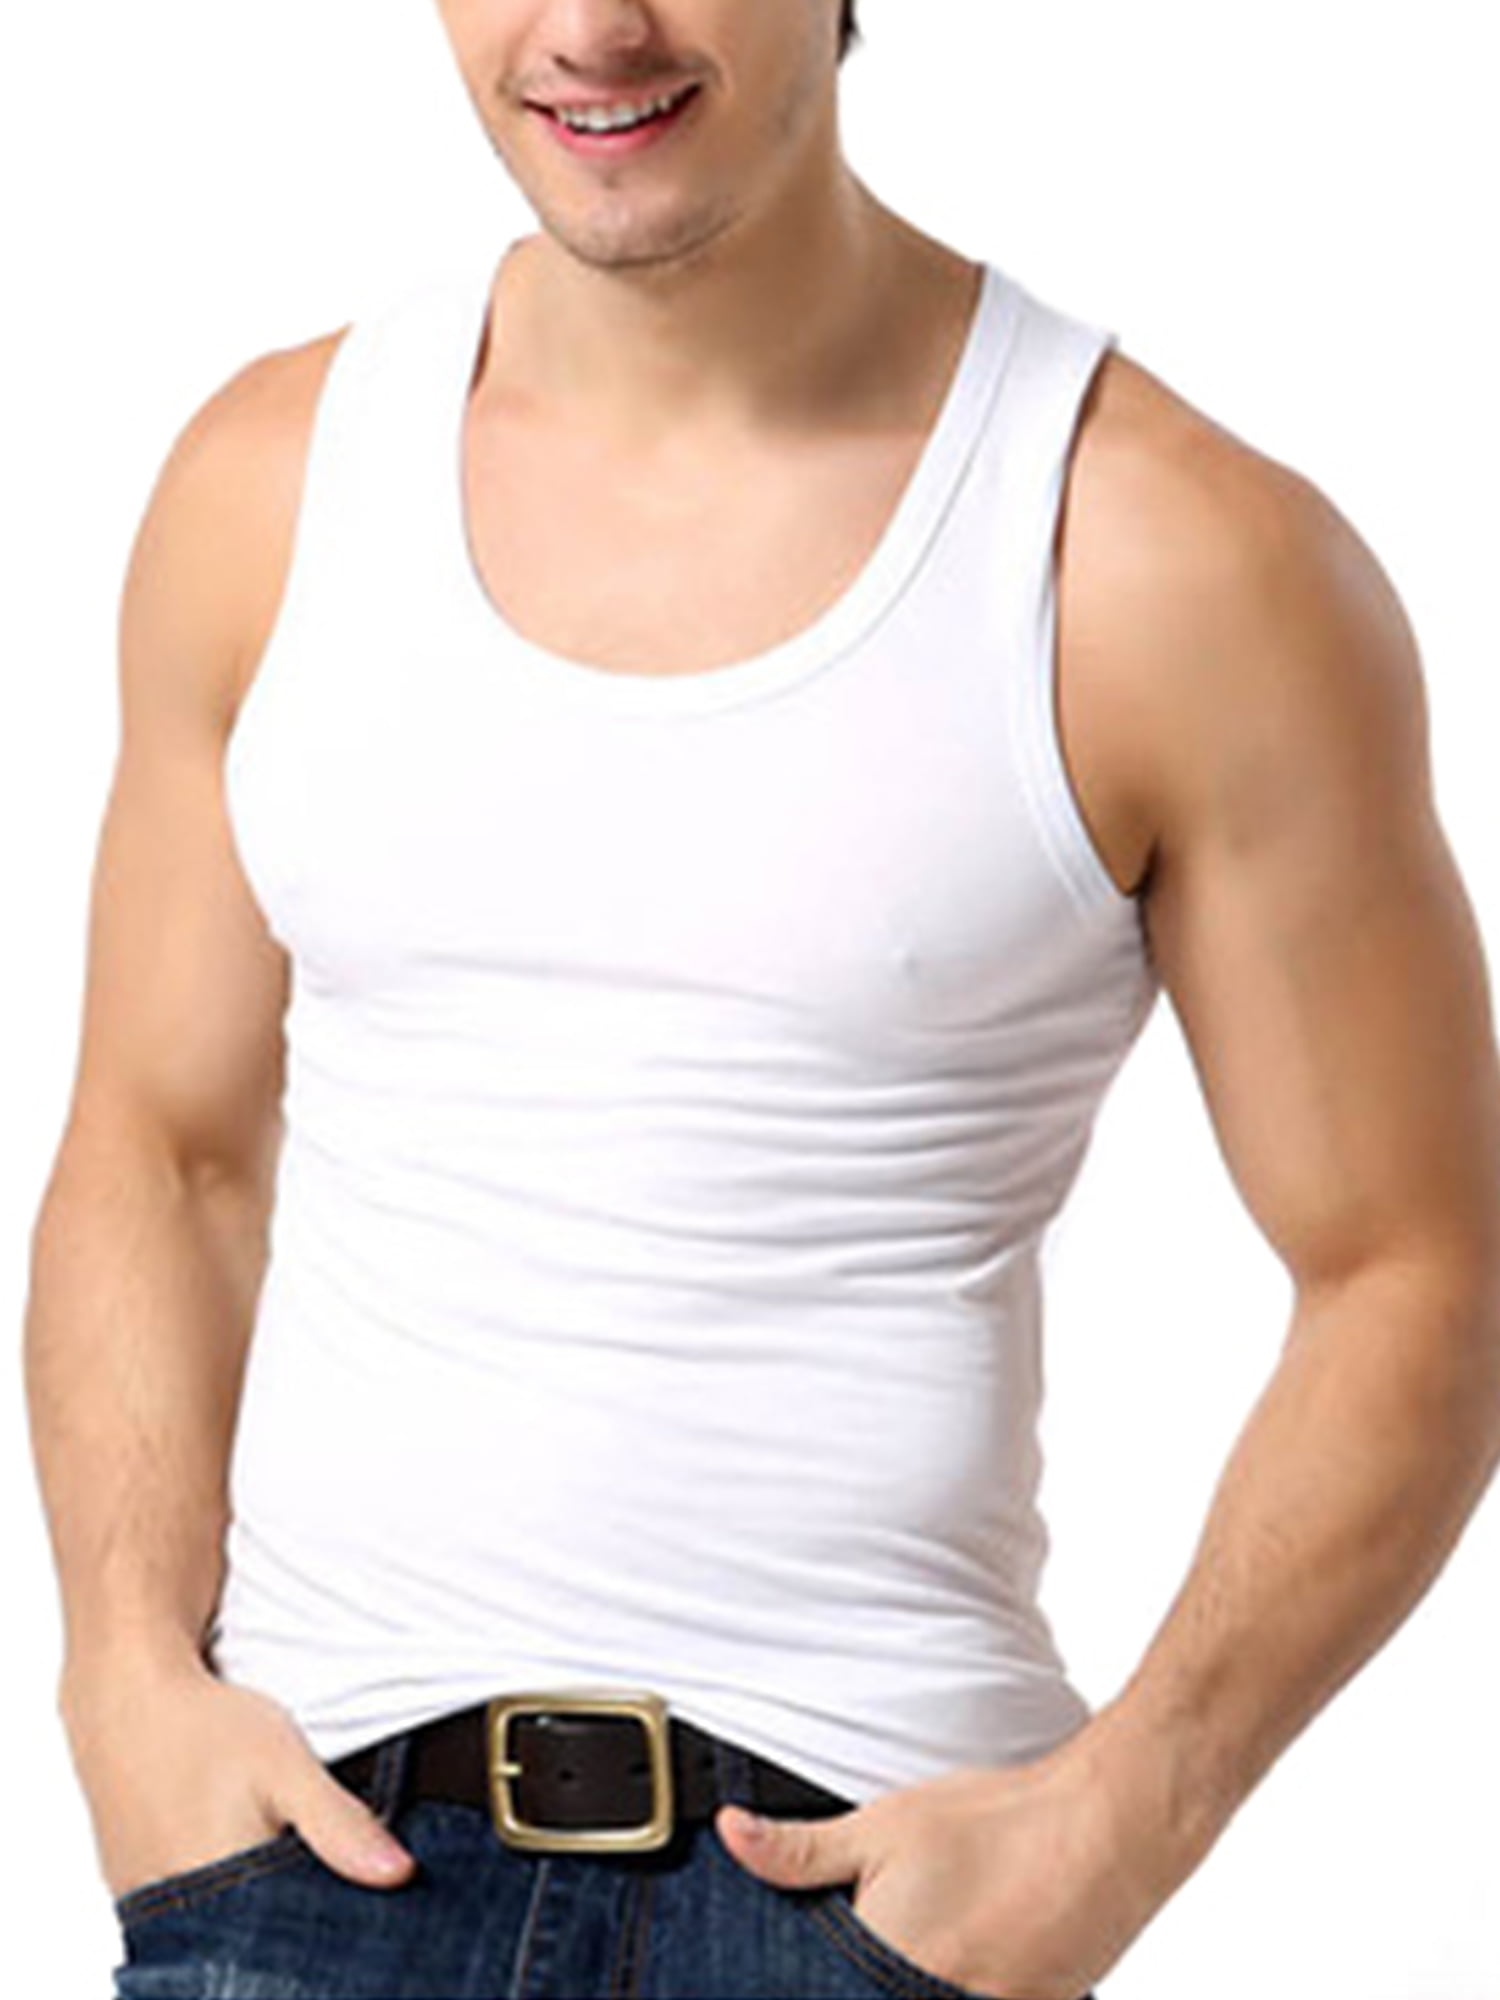 Men's sleeveless shirt Dodge Hemi design workout muscle tee tank top 